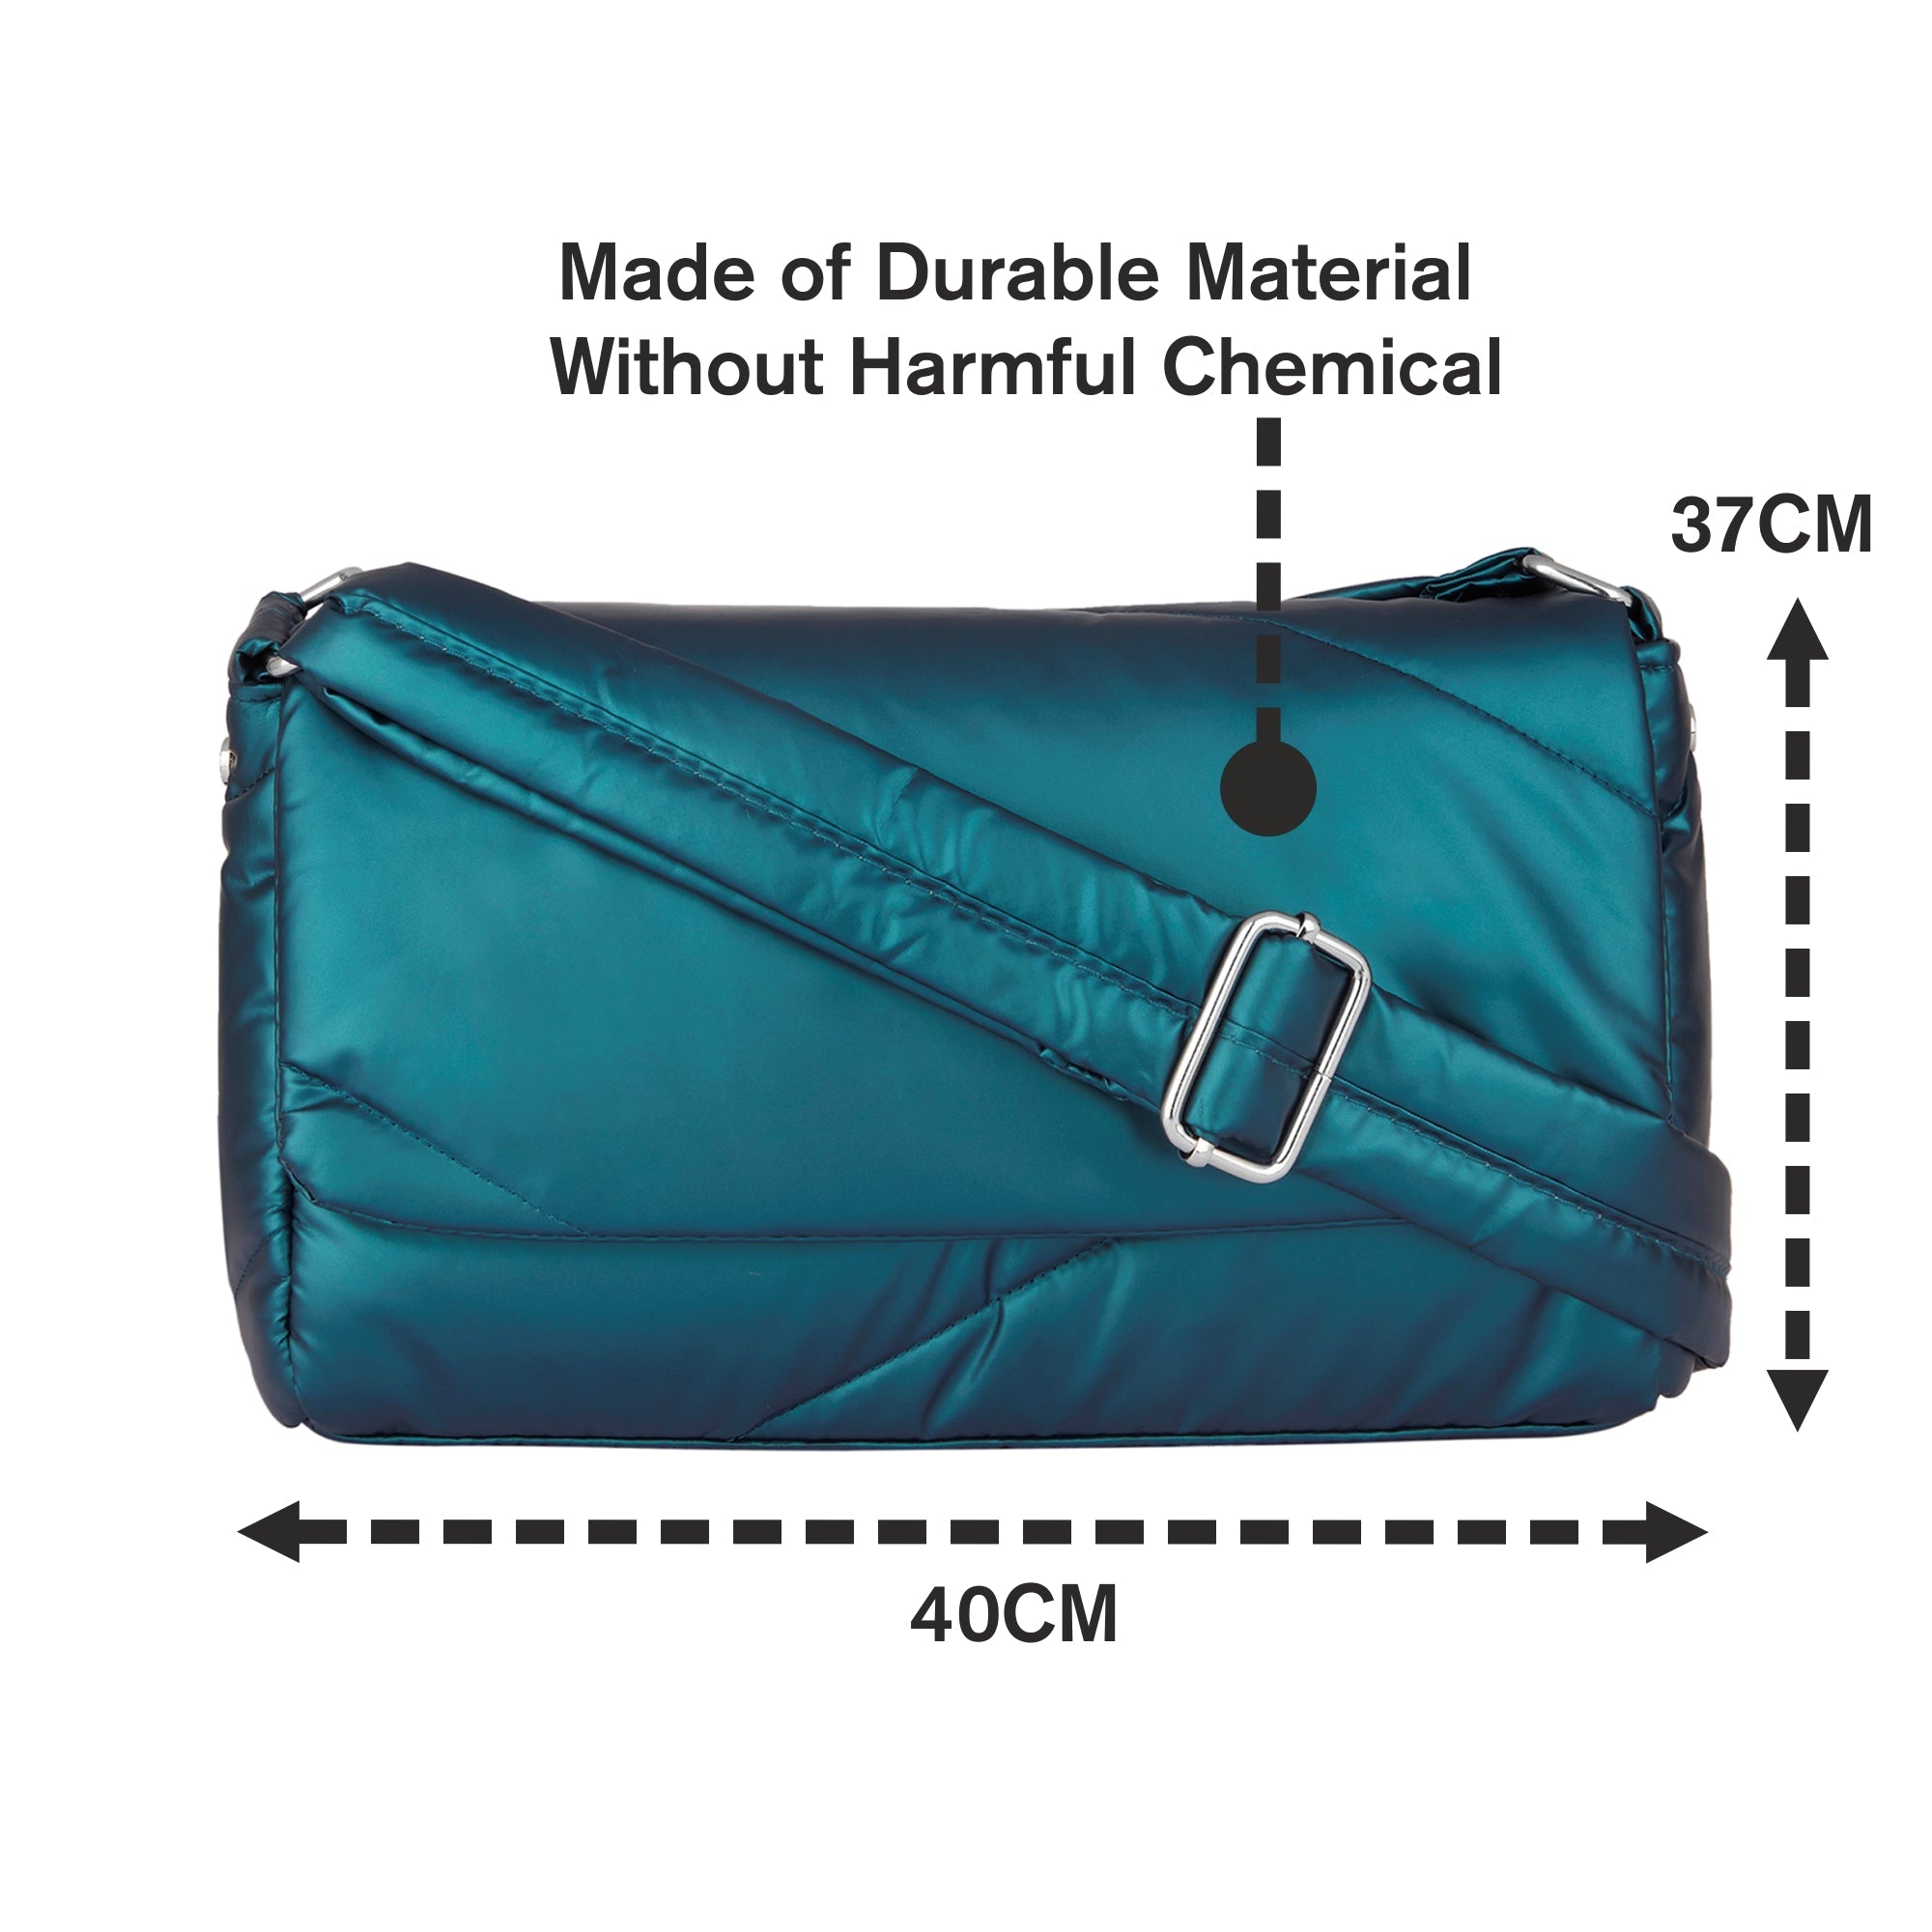 Teal Metallic Crossbody Bag Features